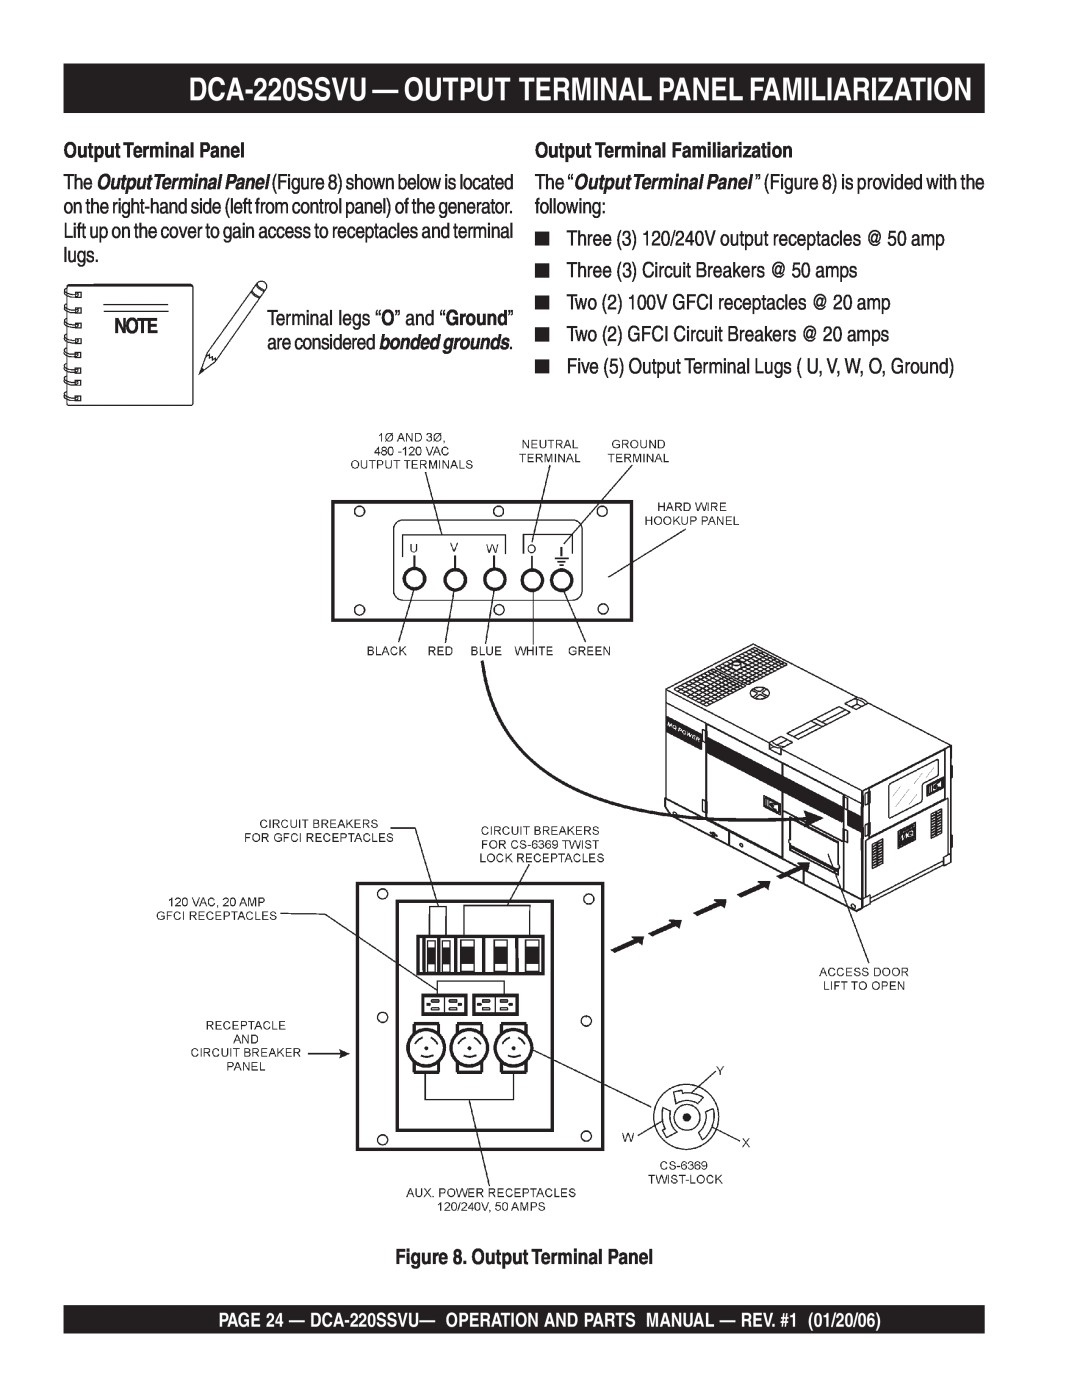 Multiquip DCA-220SSVU operation manual Output Terminal Familiarization, Output Terminal Panel 